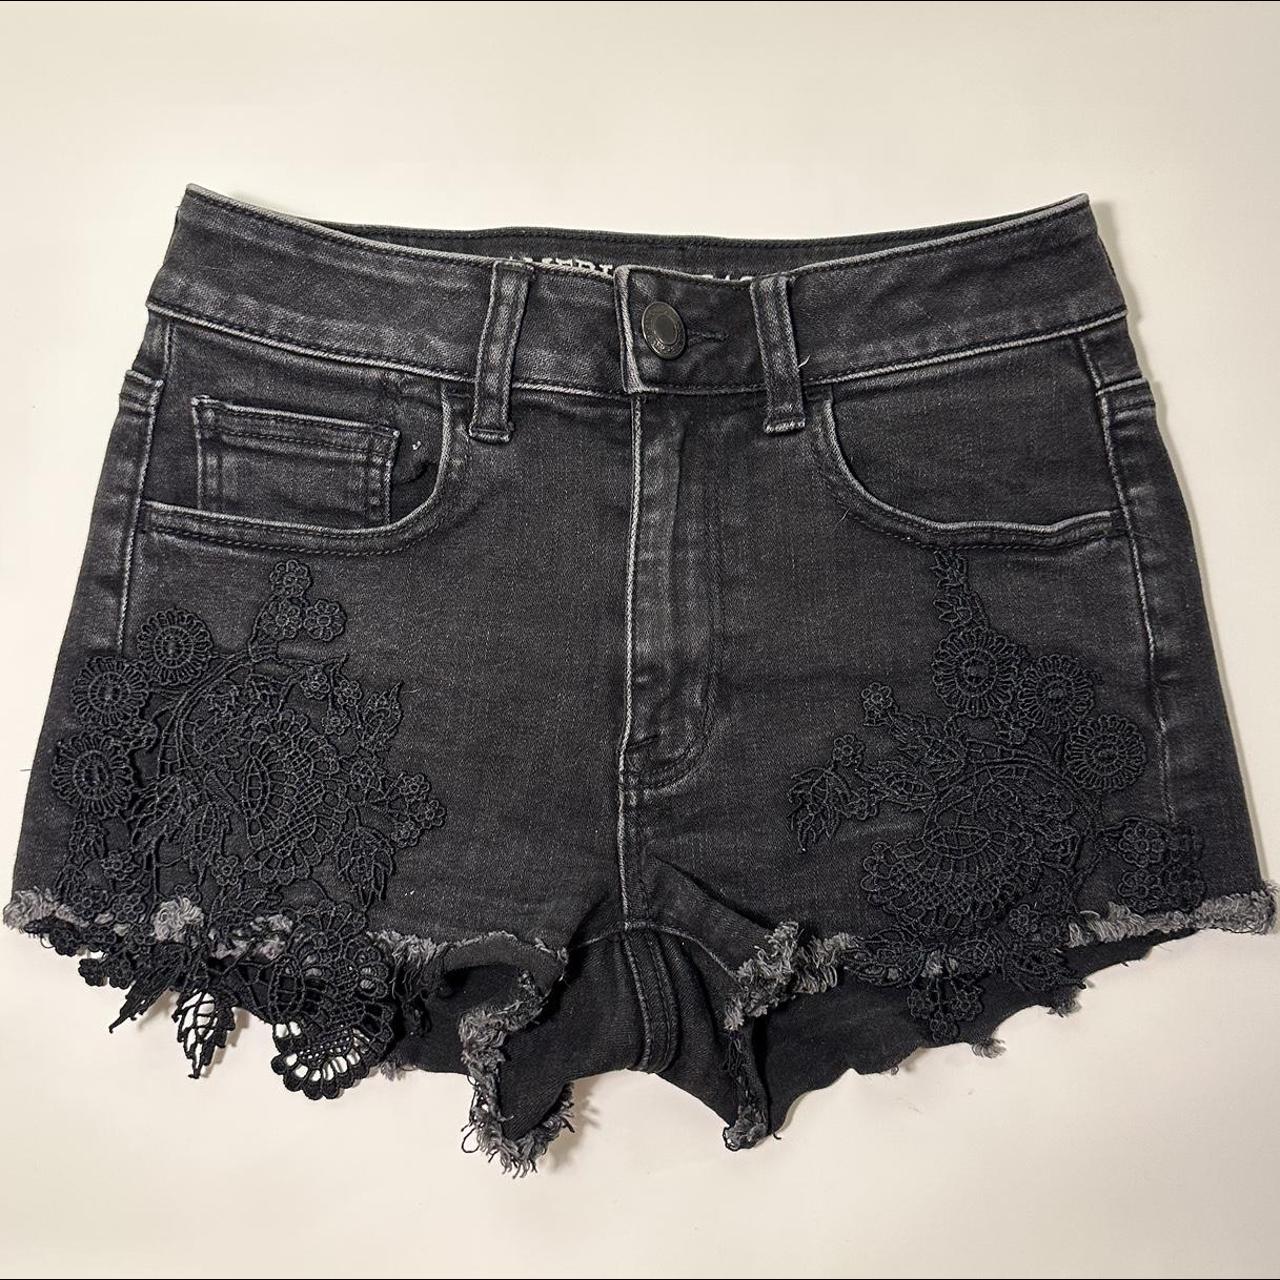 High-waisted shorts, Black, denim and lace shorts